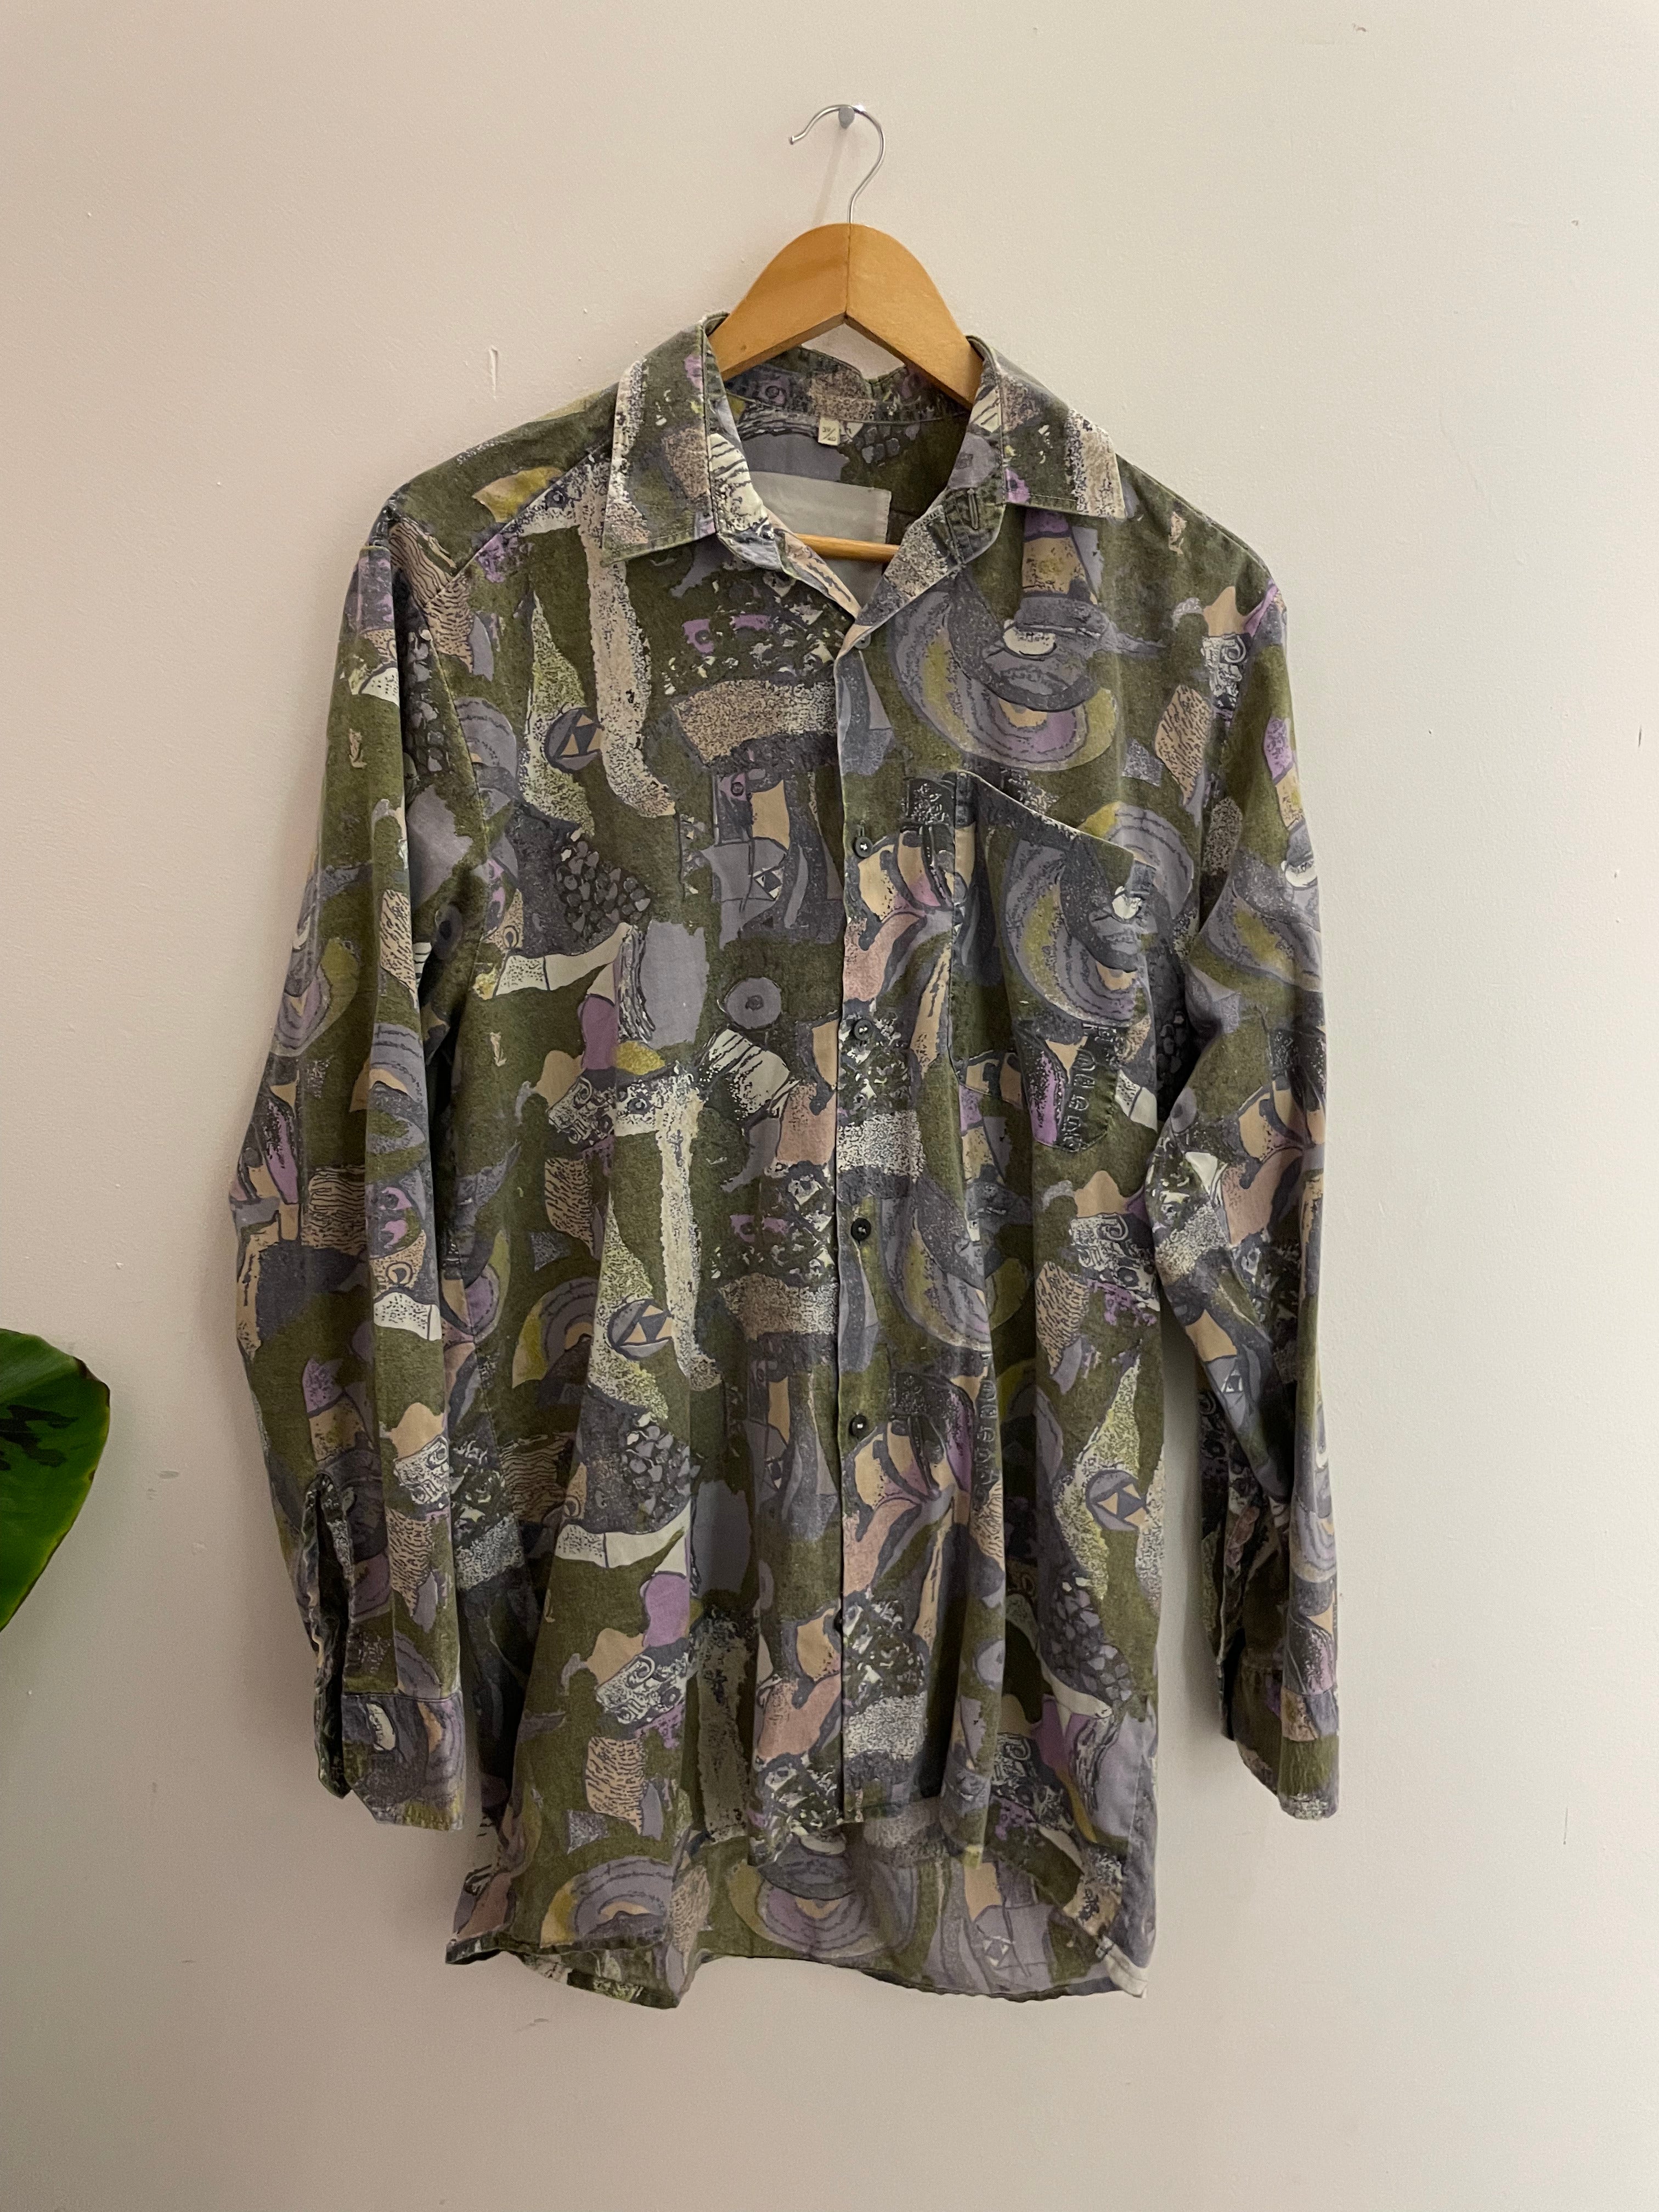 Vintage multi abstract pattern festive mens long sleeve shirt size M